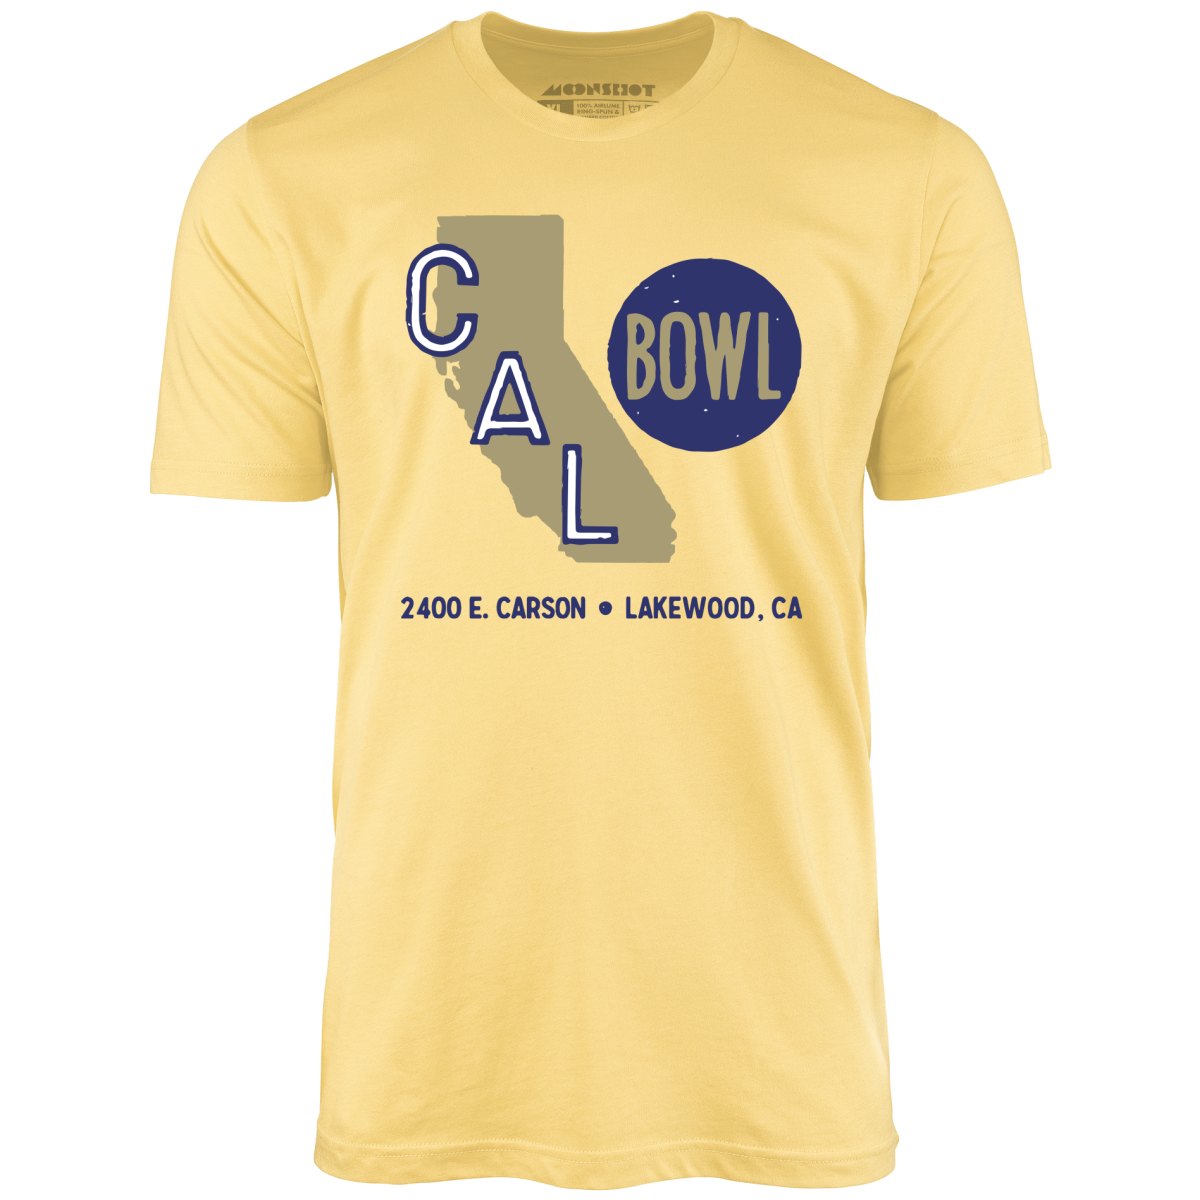 Cal Bowl - Lakewood, CA - Vintage Bowling Alley - Unisex T-Shirt